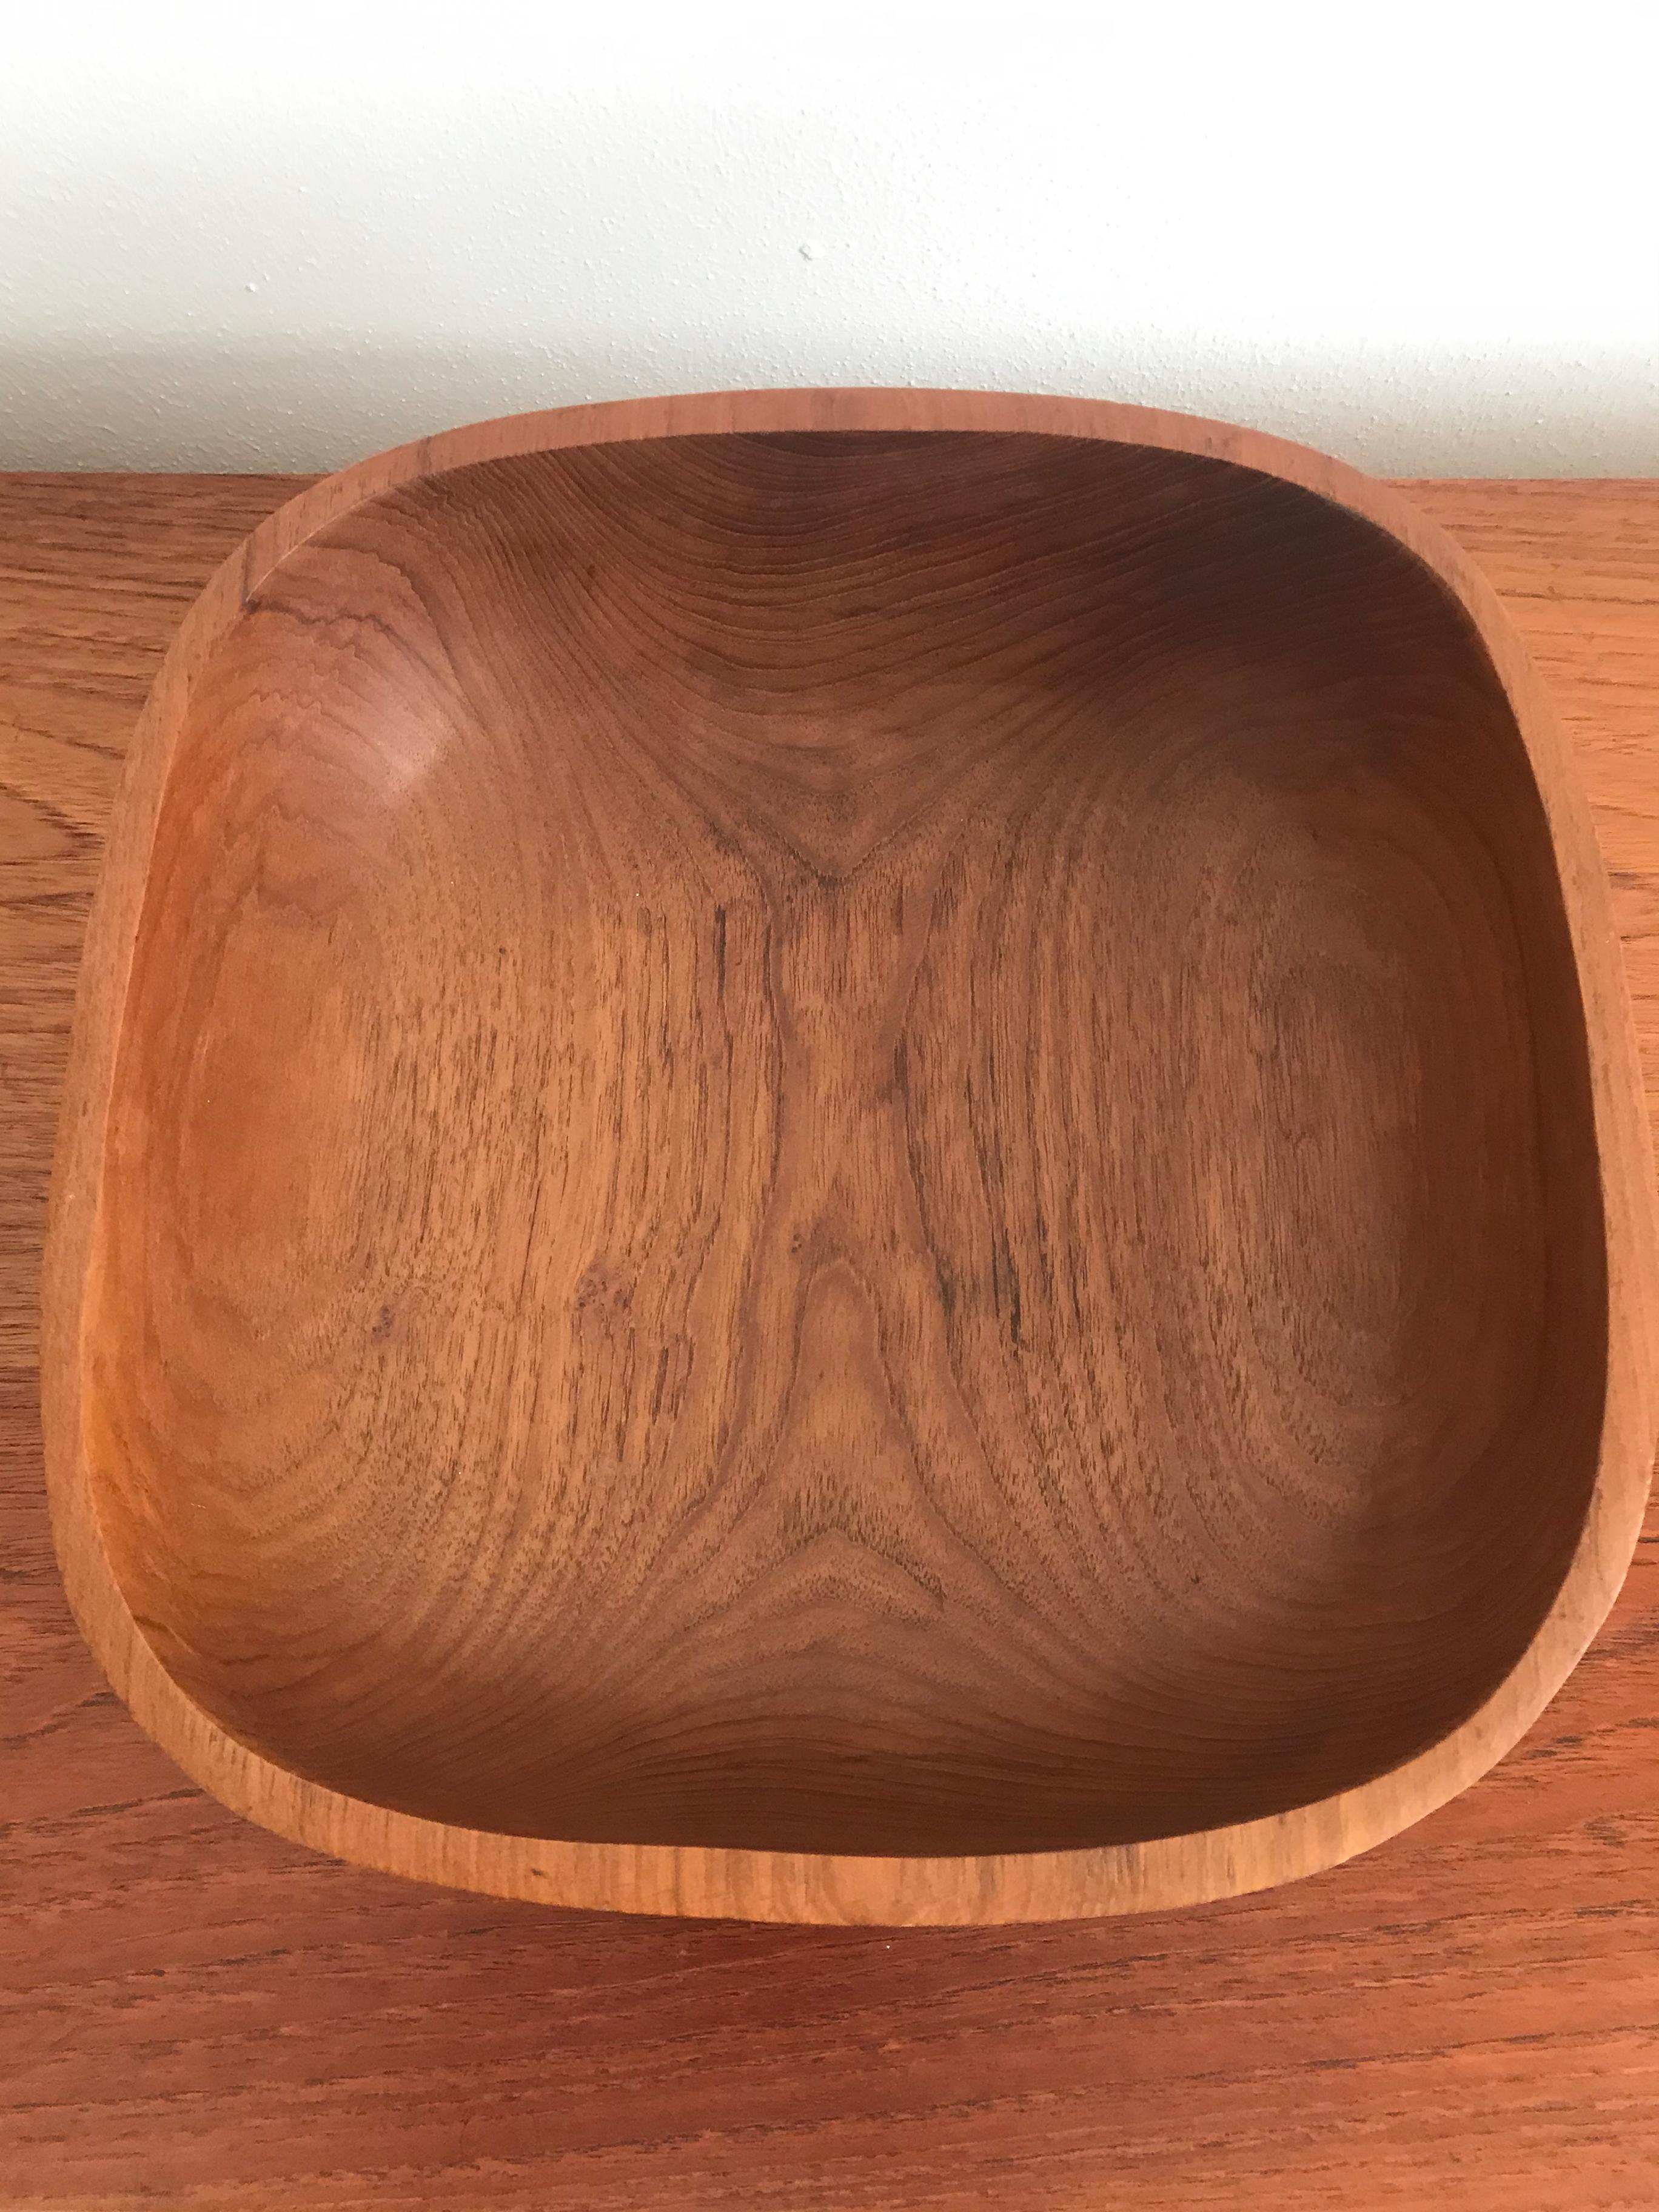 Wood Scandinavian Bowl Centerpiece 1960s In Good Condition For Sale In Reggio Emilia, IT